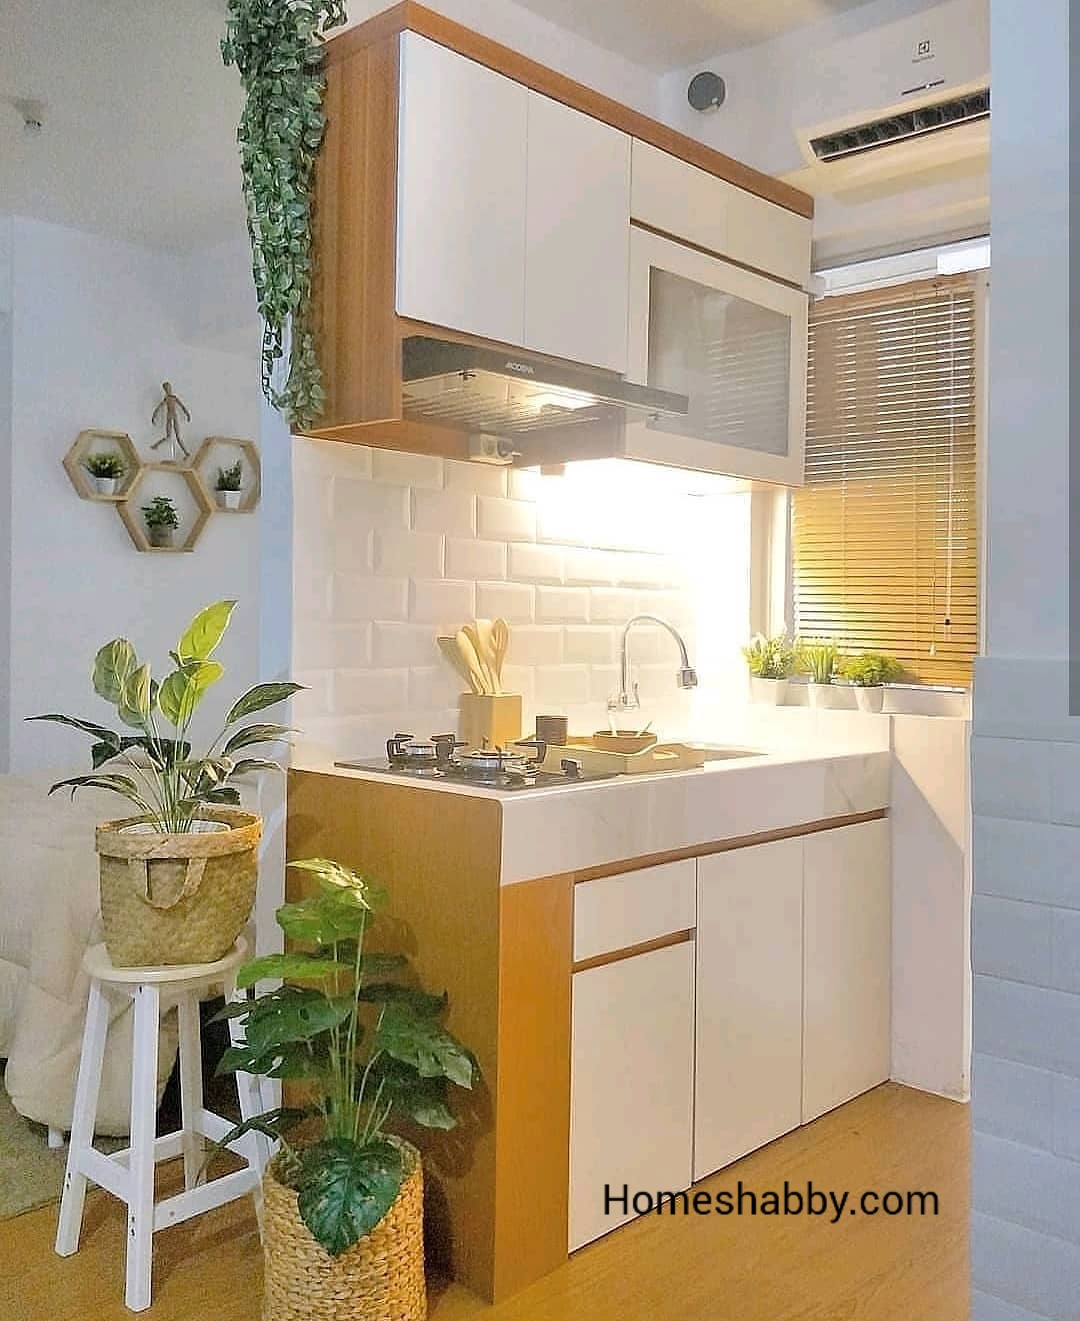 6 Desain Dapur Minimalis Ukuran 1 X 1 M Terbaru Homeshabbycom Design Home Plans